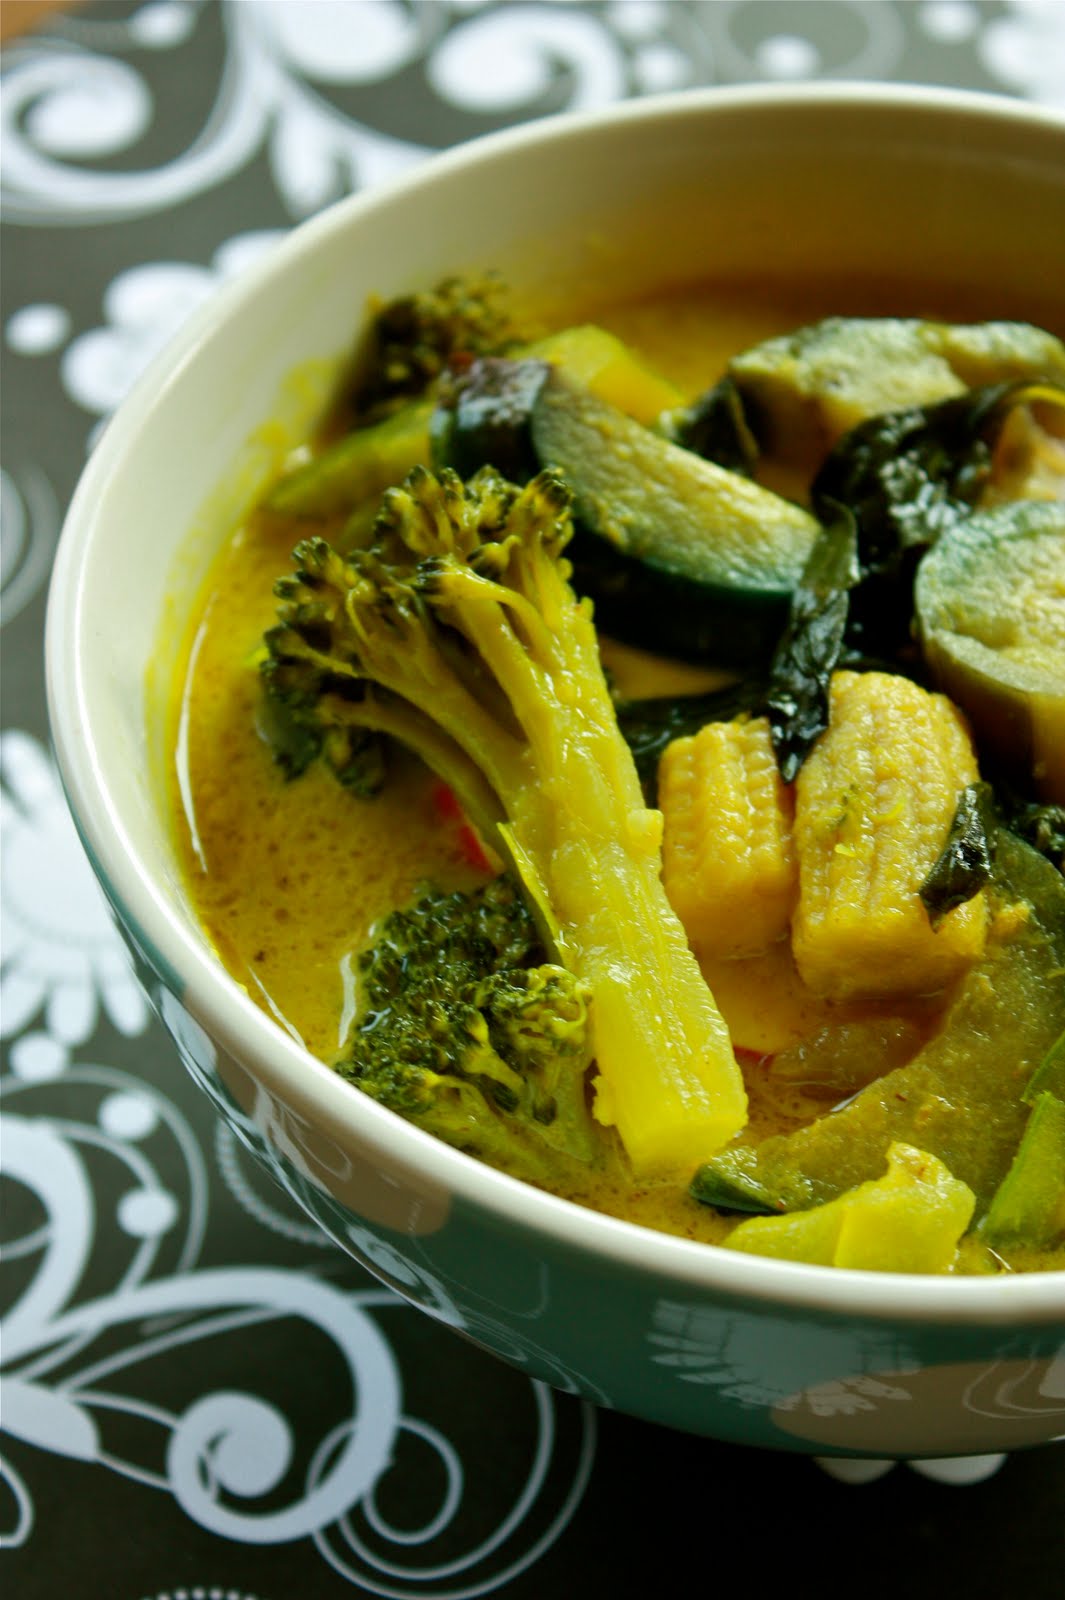 Sreelus Tasty Travels: Yellow Thai Curry